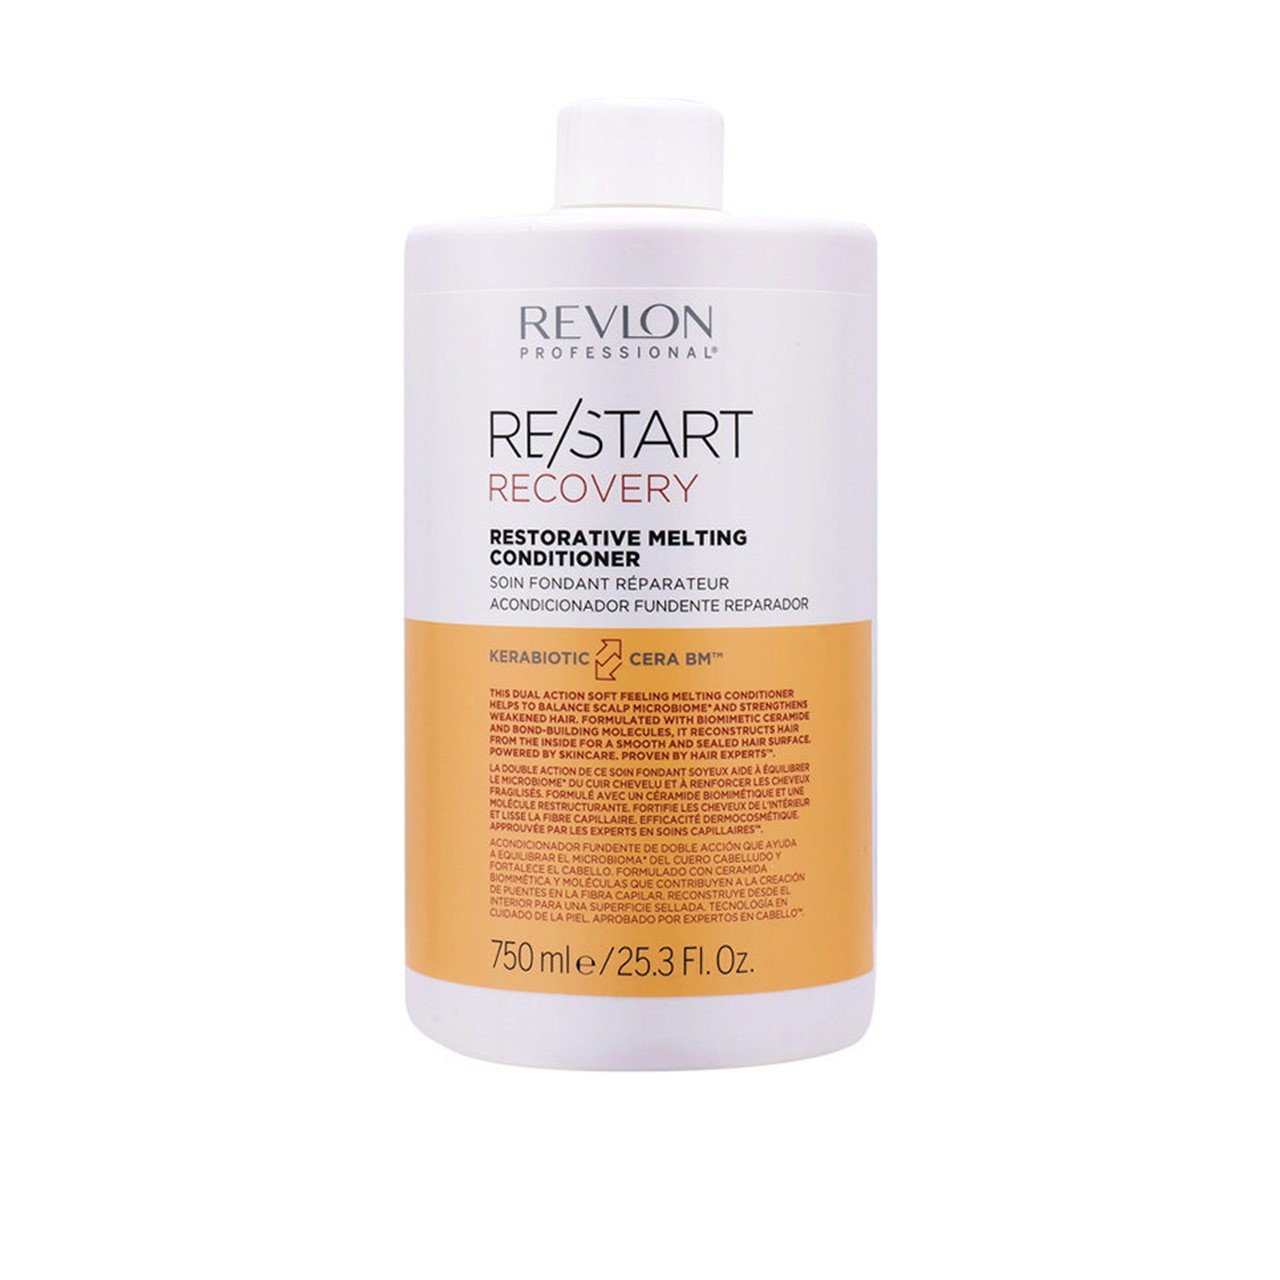 Revlon Professional Re/Start Recovery Restorative Melting Conditioner